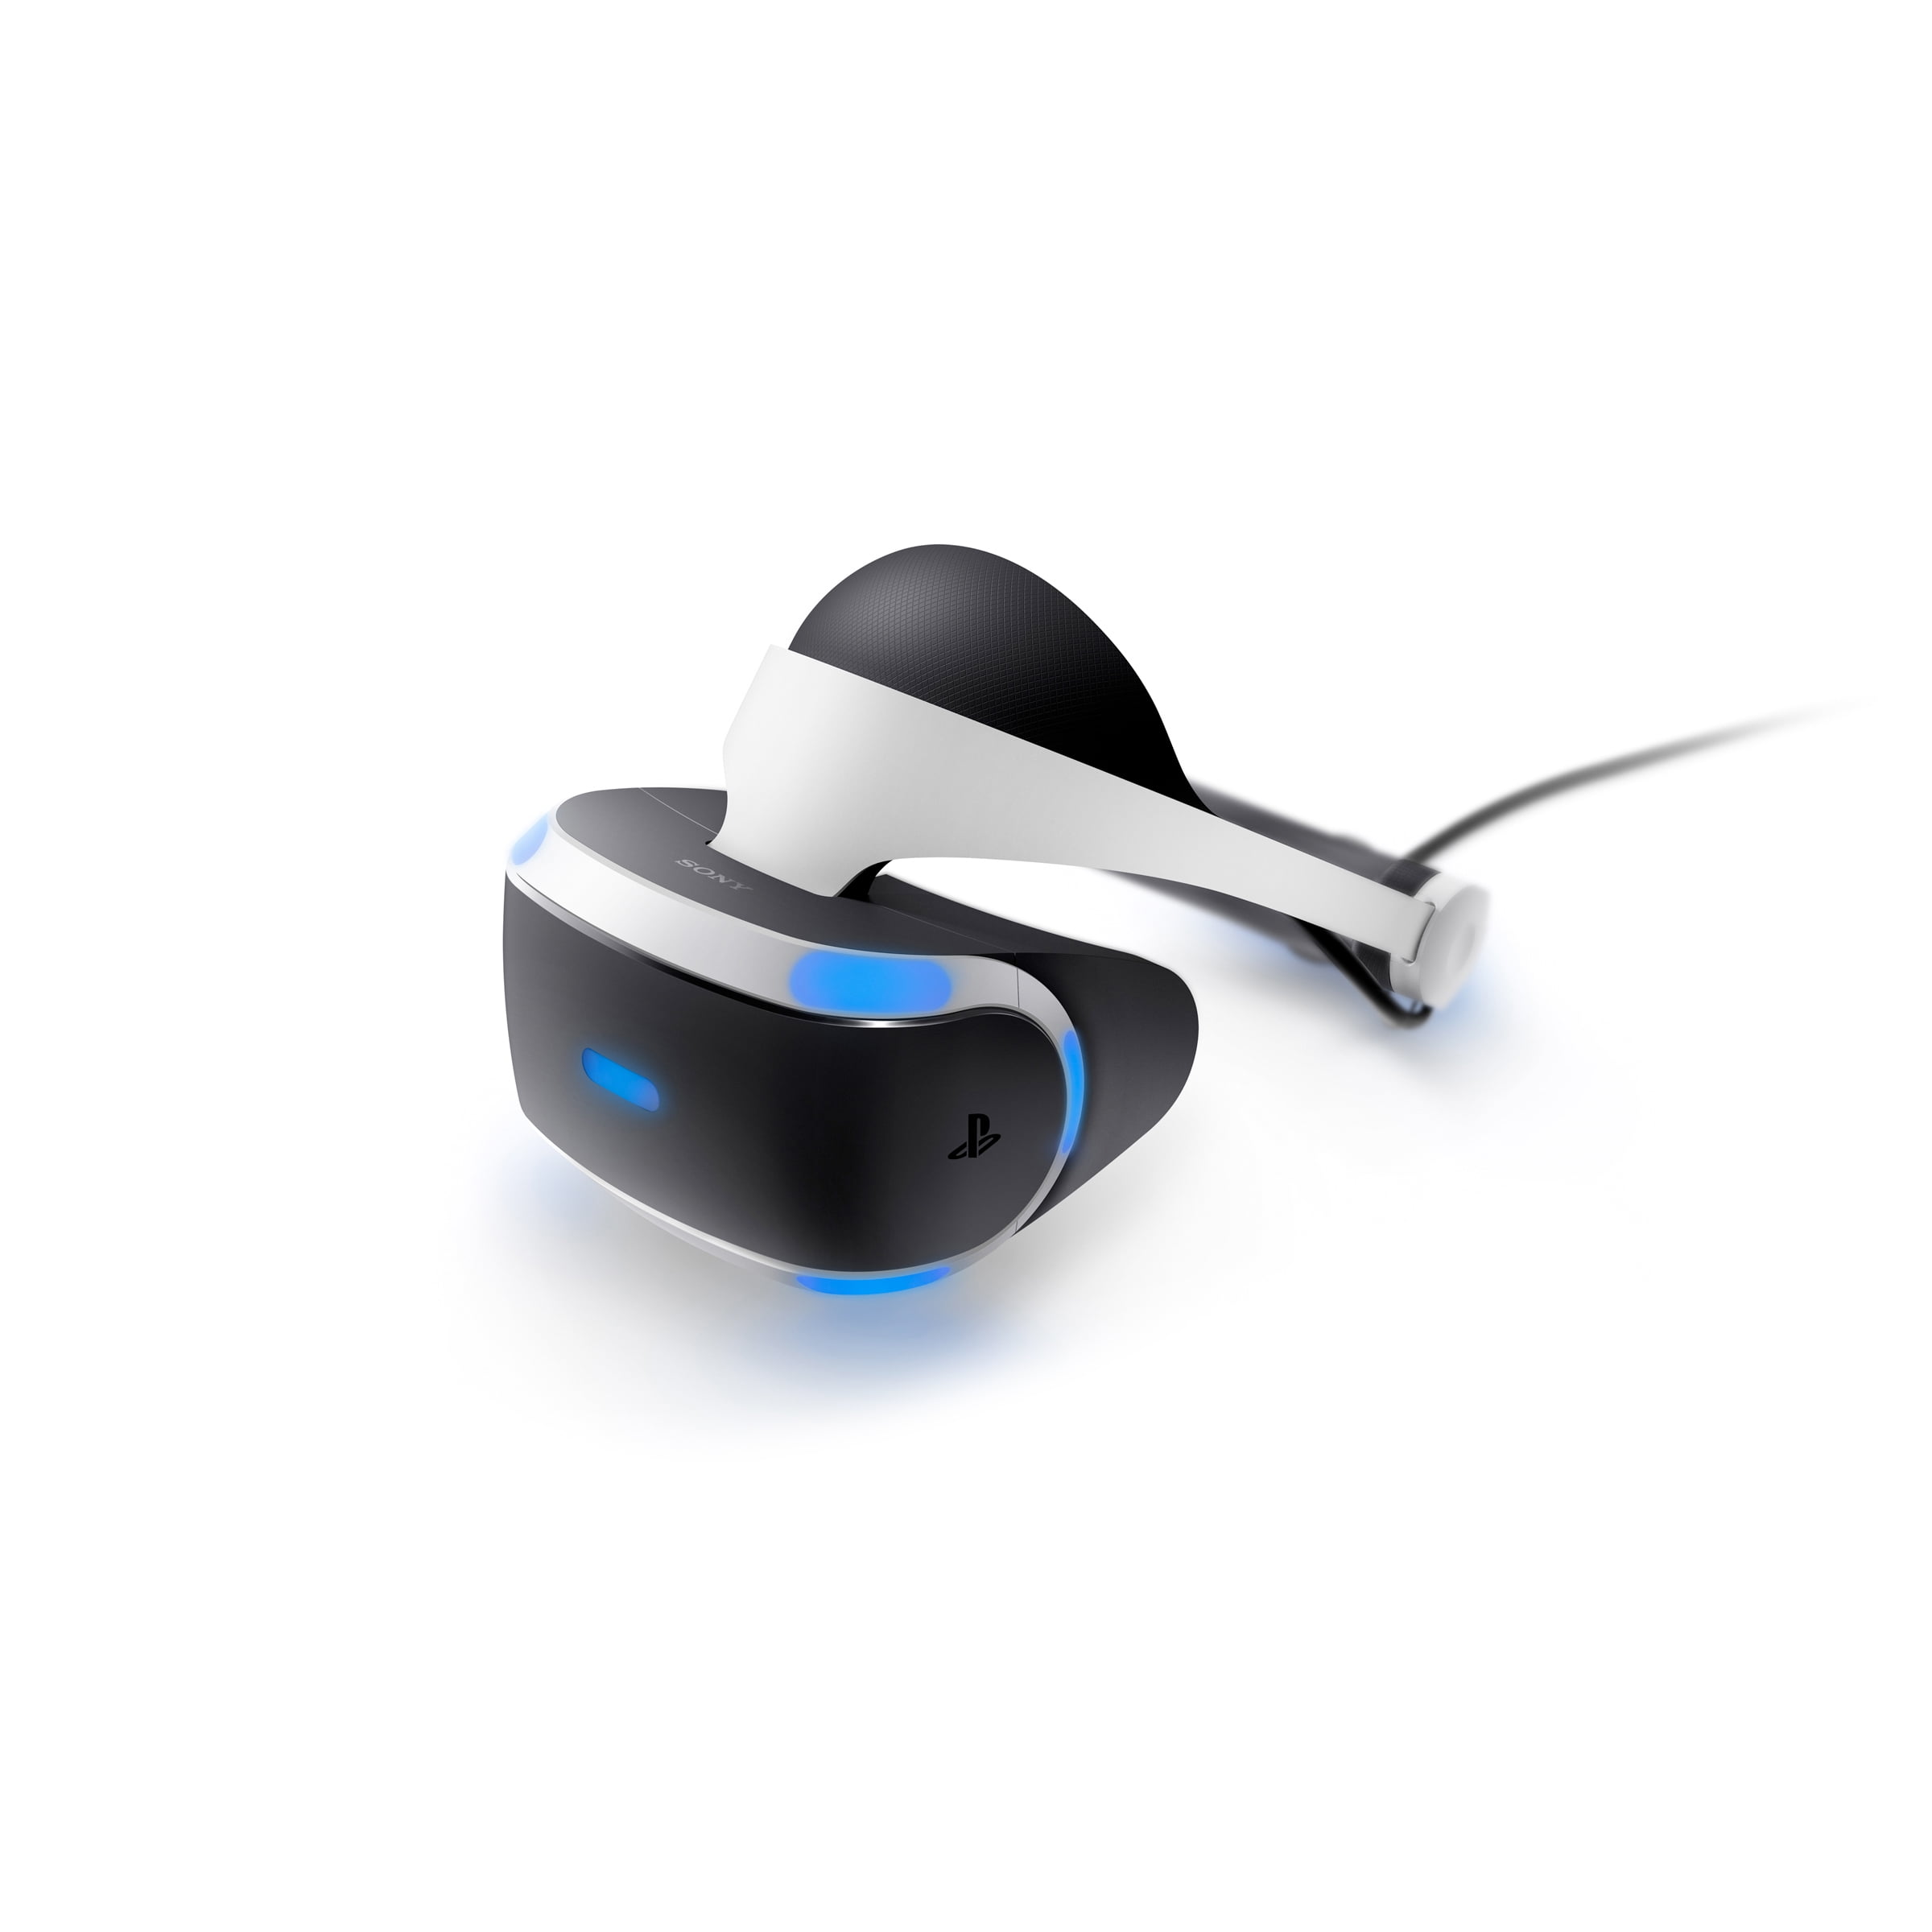 betale sig impressionisme udtryk Sony PlayStation VR Headset, 3001560 - Walmart.com